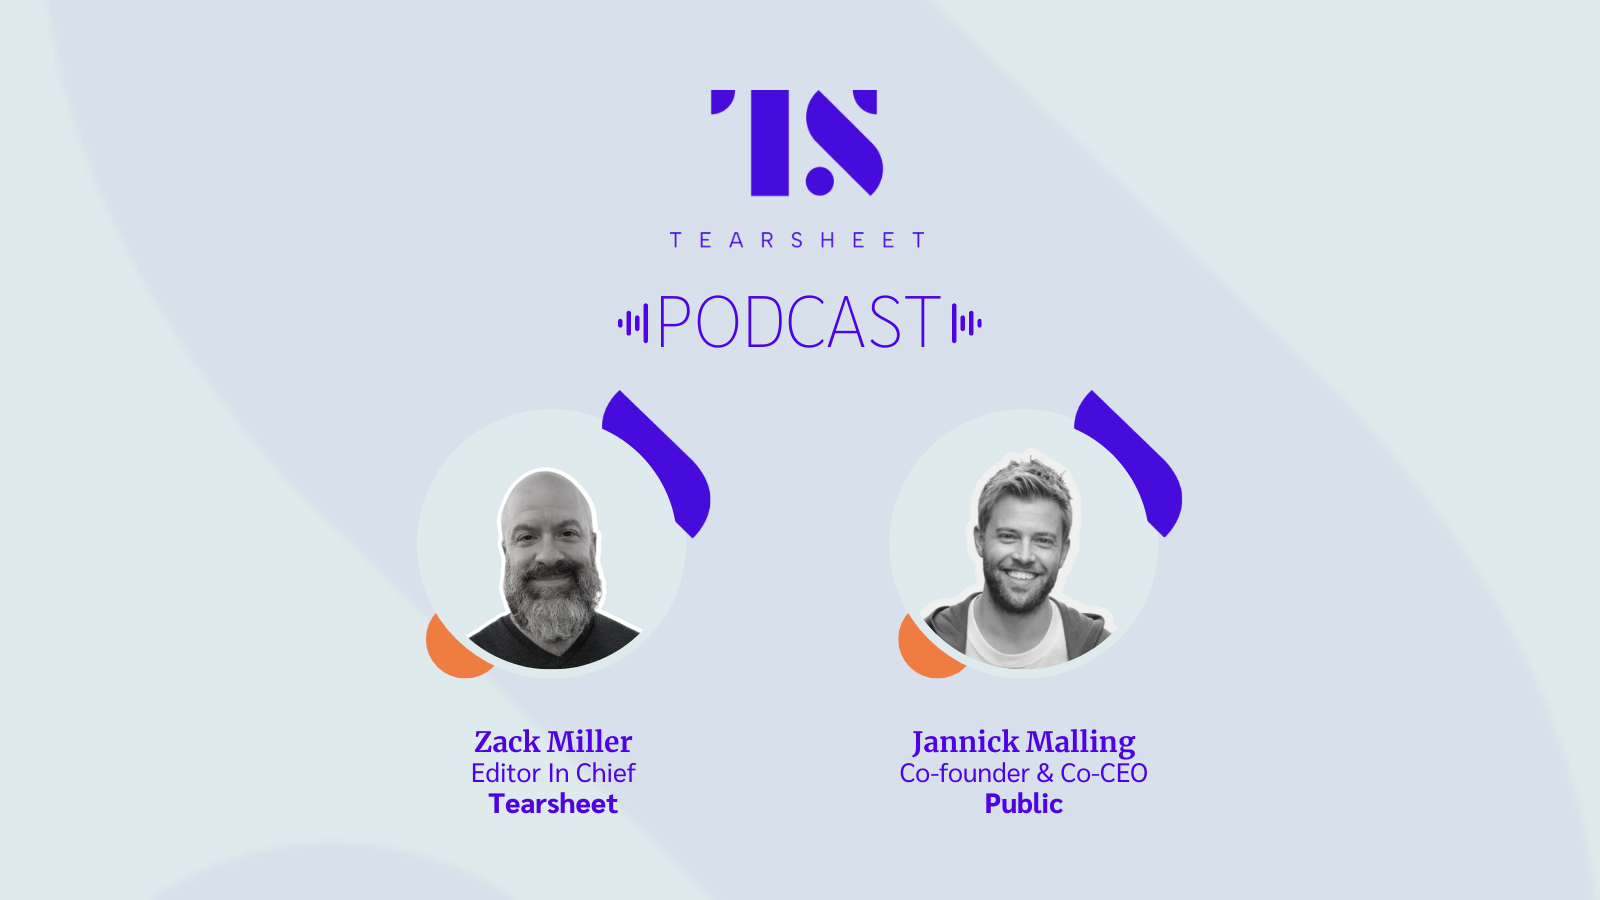 Public's Jannick Malling on Tearsheet Podcast